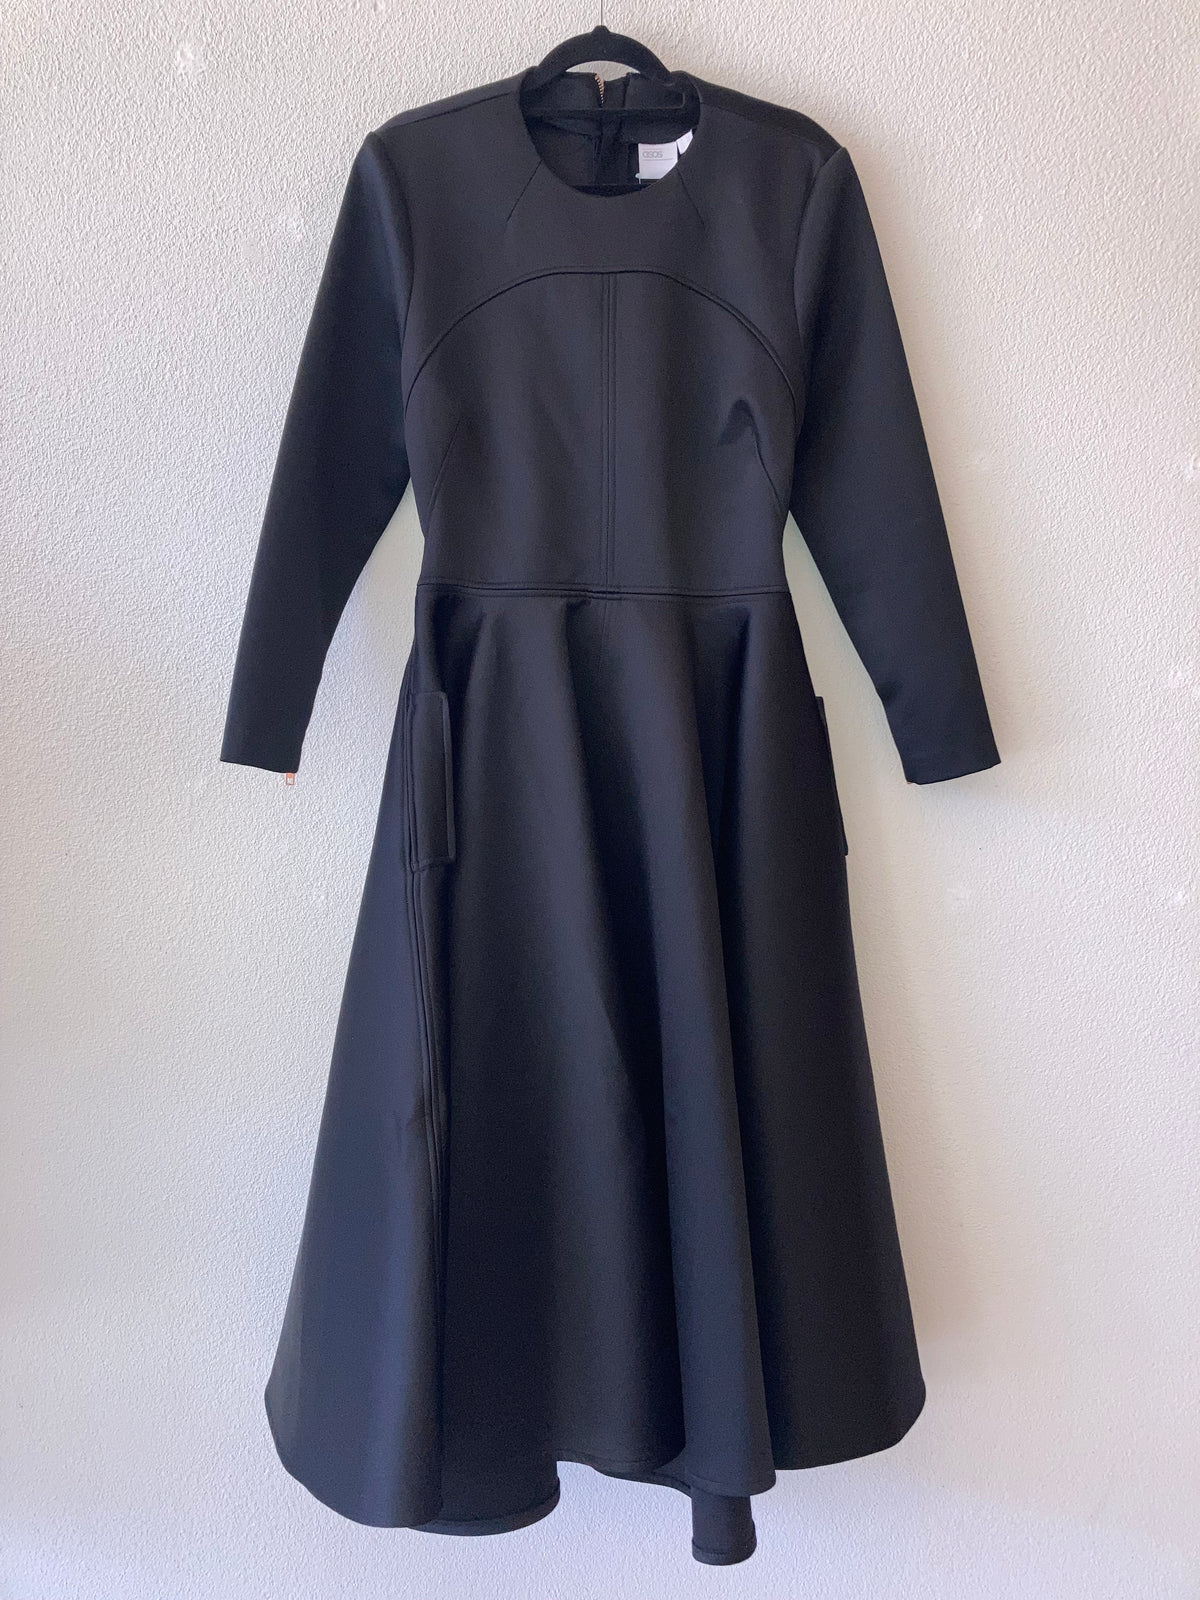 ASOS White NEW Black Coat Dress Rose gold zip 12